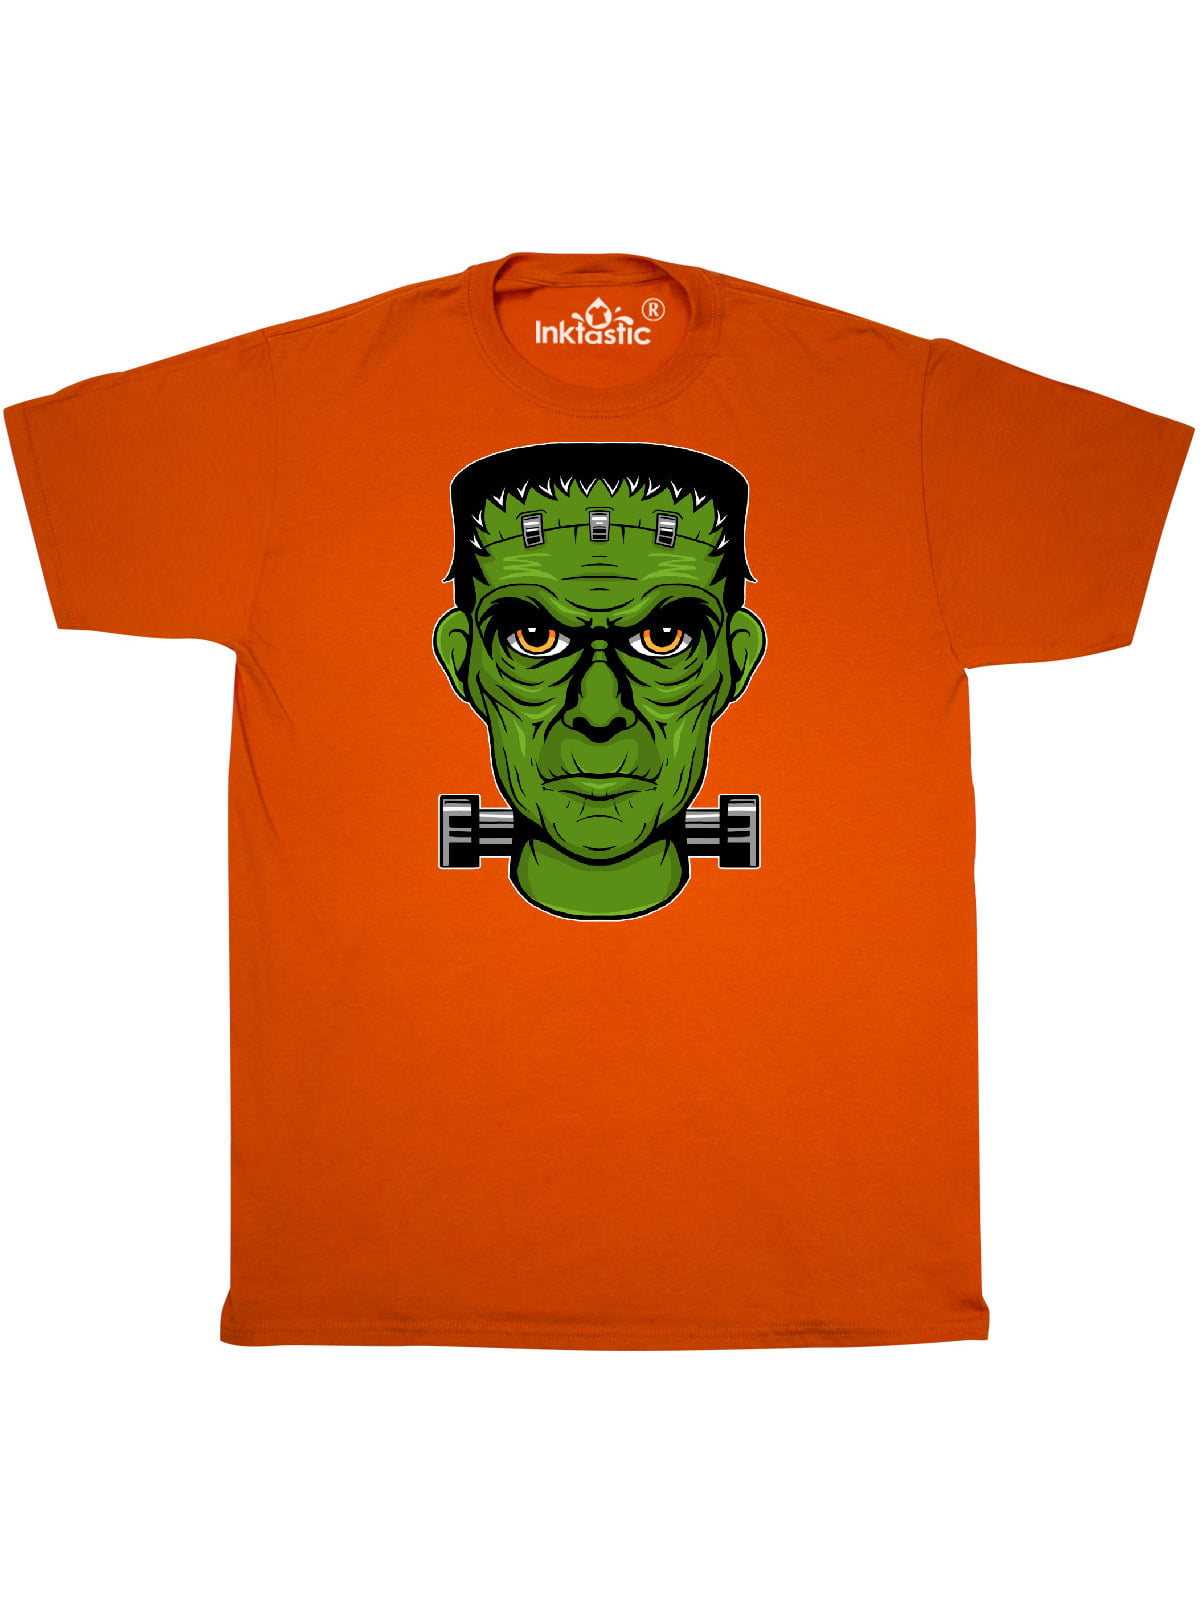 INKtastic - Halloween Frankenstein Head T-Shirt - Walmart.com - Walmart.com